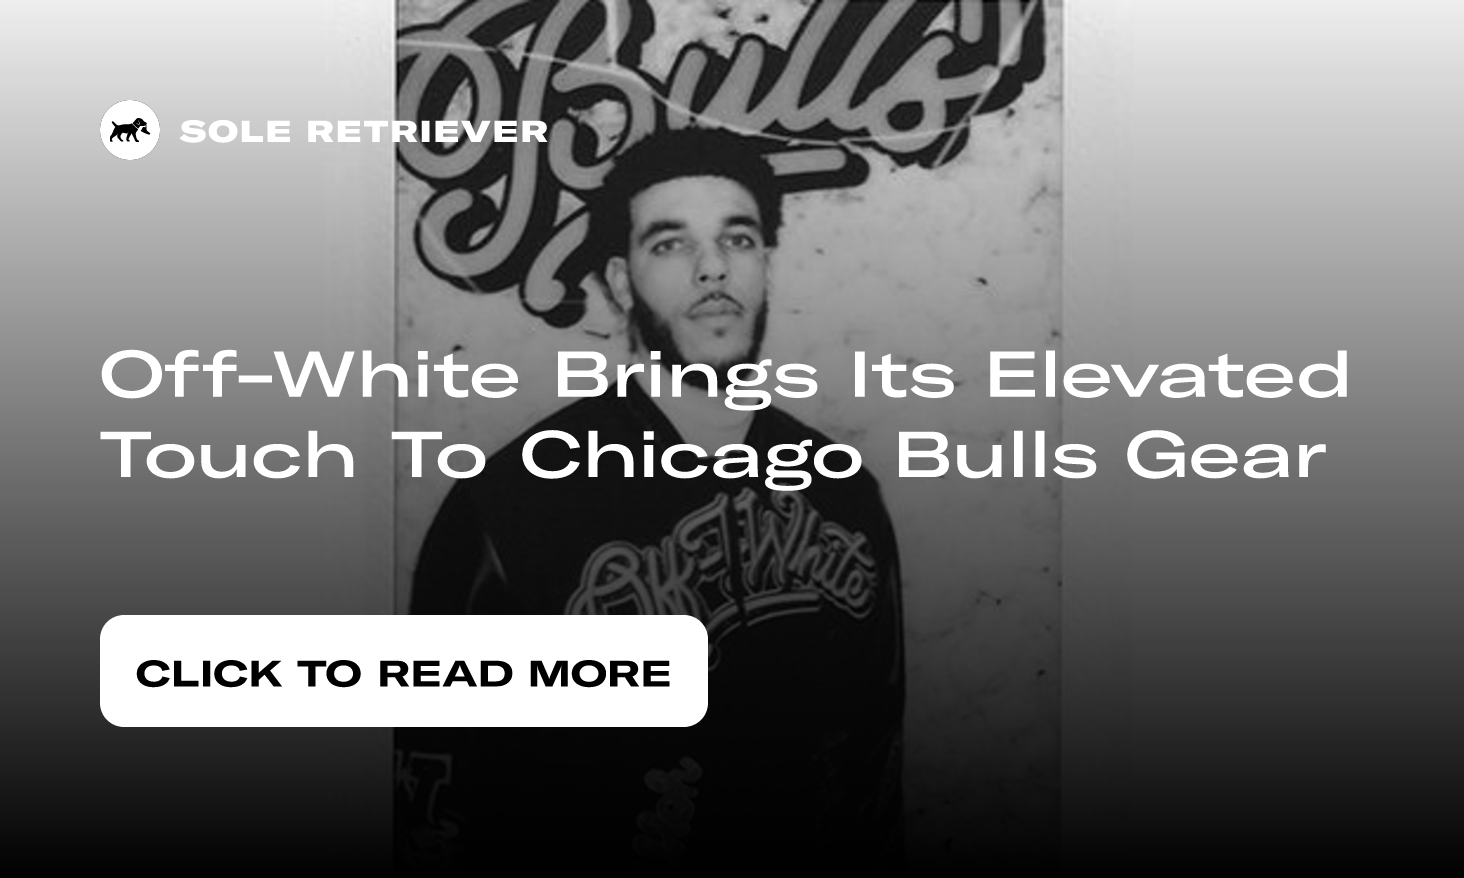 Off-White Chicago Bulls Varsity Jacket Tee Release Info